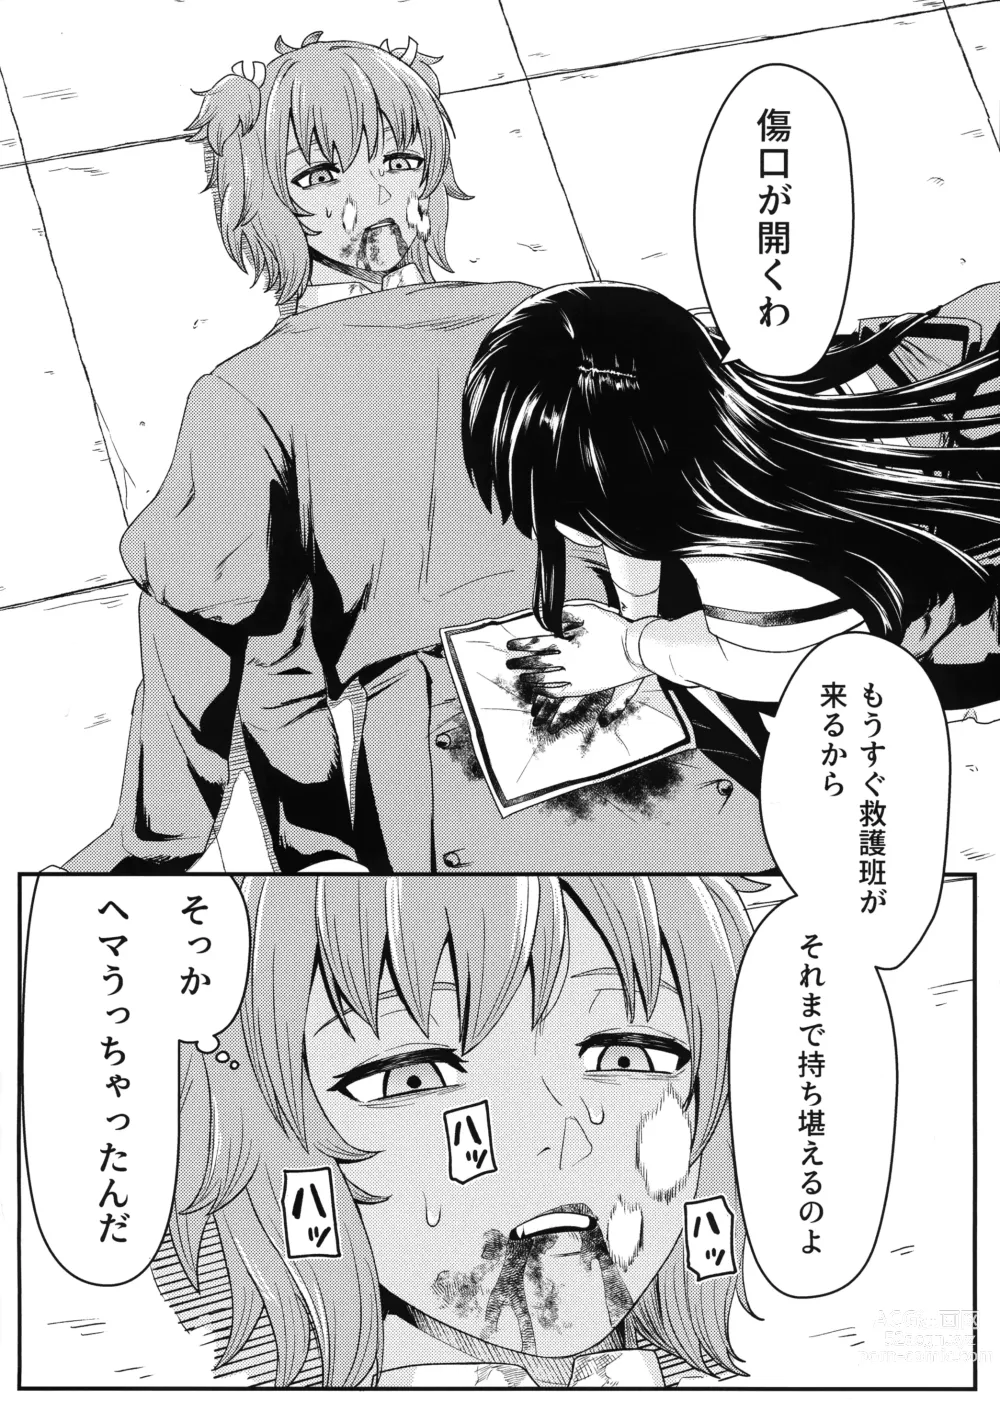 Page 3 of doujinshi Corsage